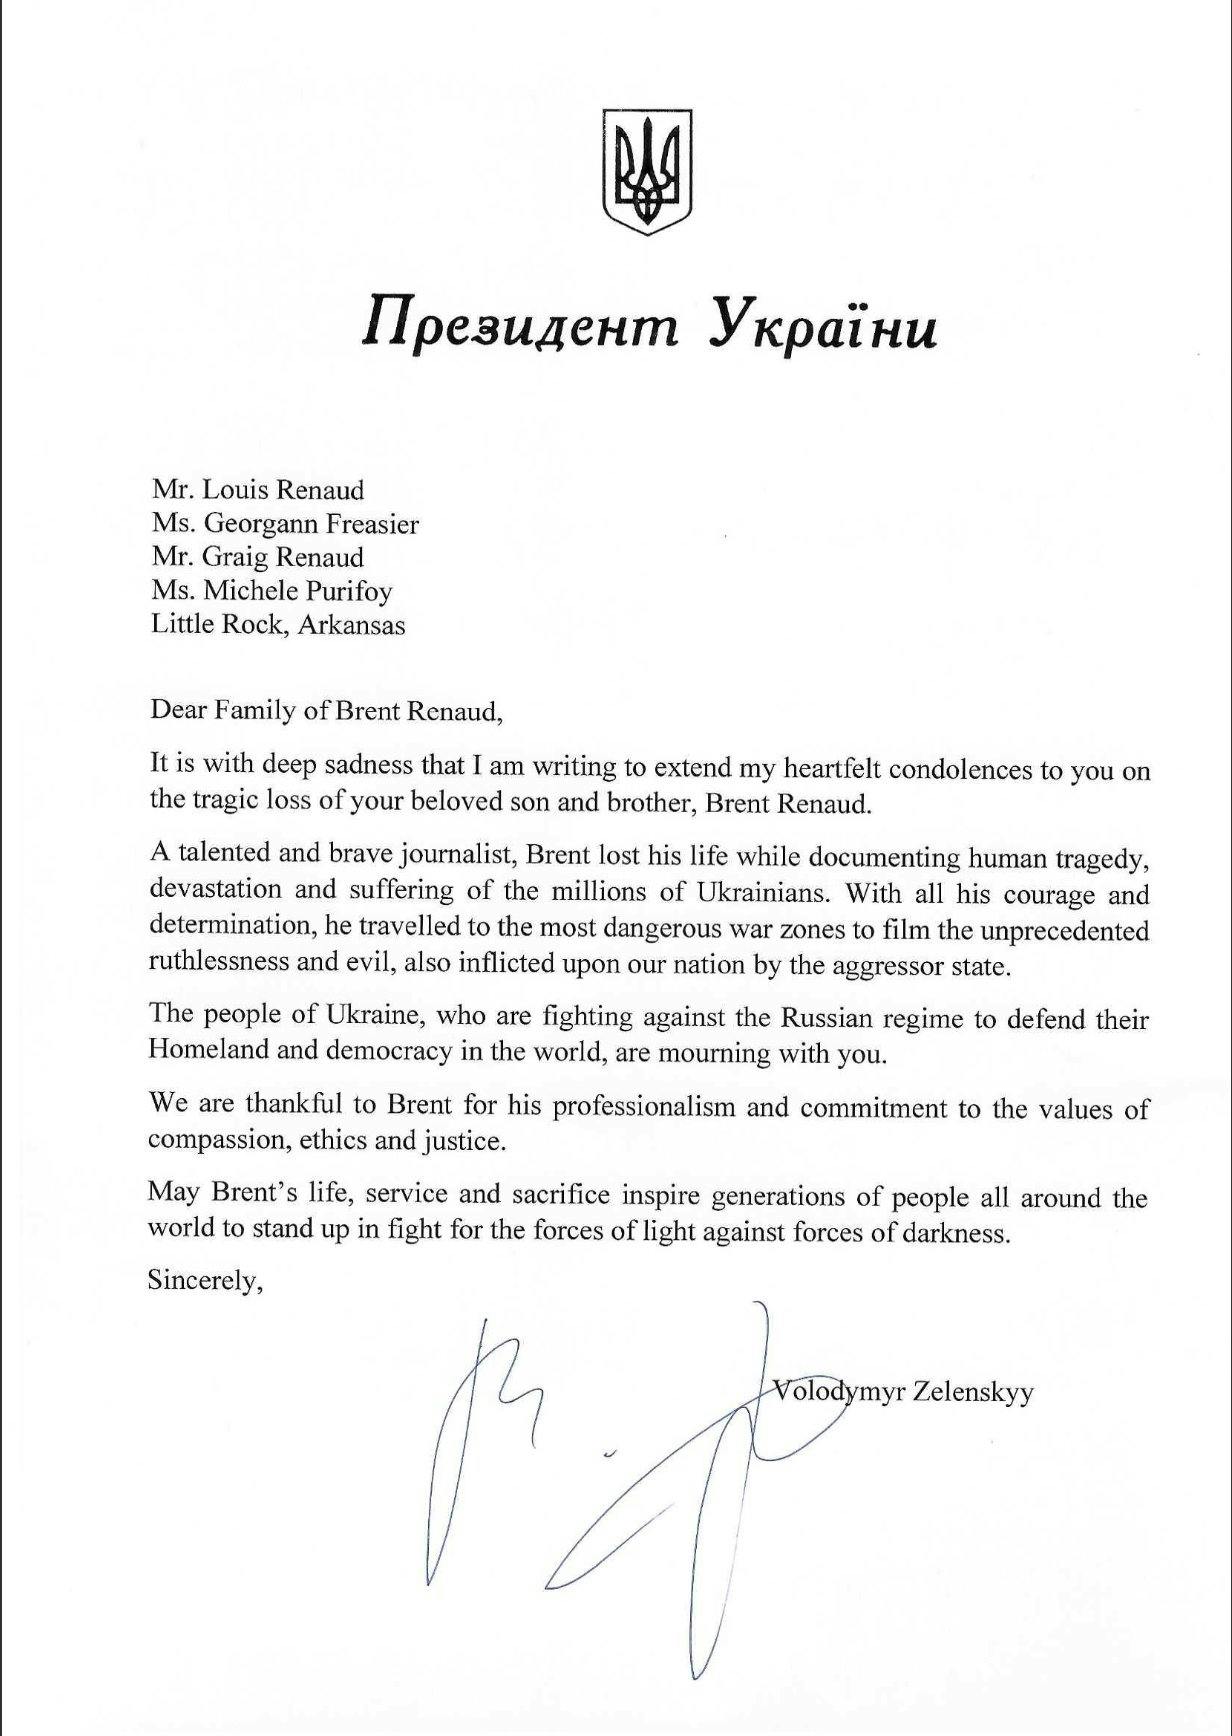 Володимир Зеленський, President of Ukraine's, English statement (@ZelenskyyUa on twitter)